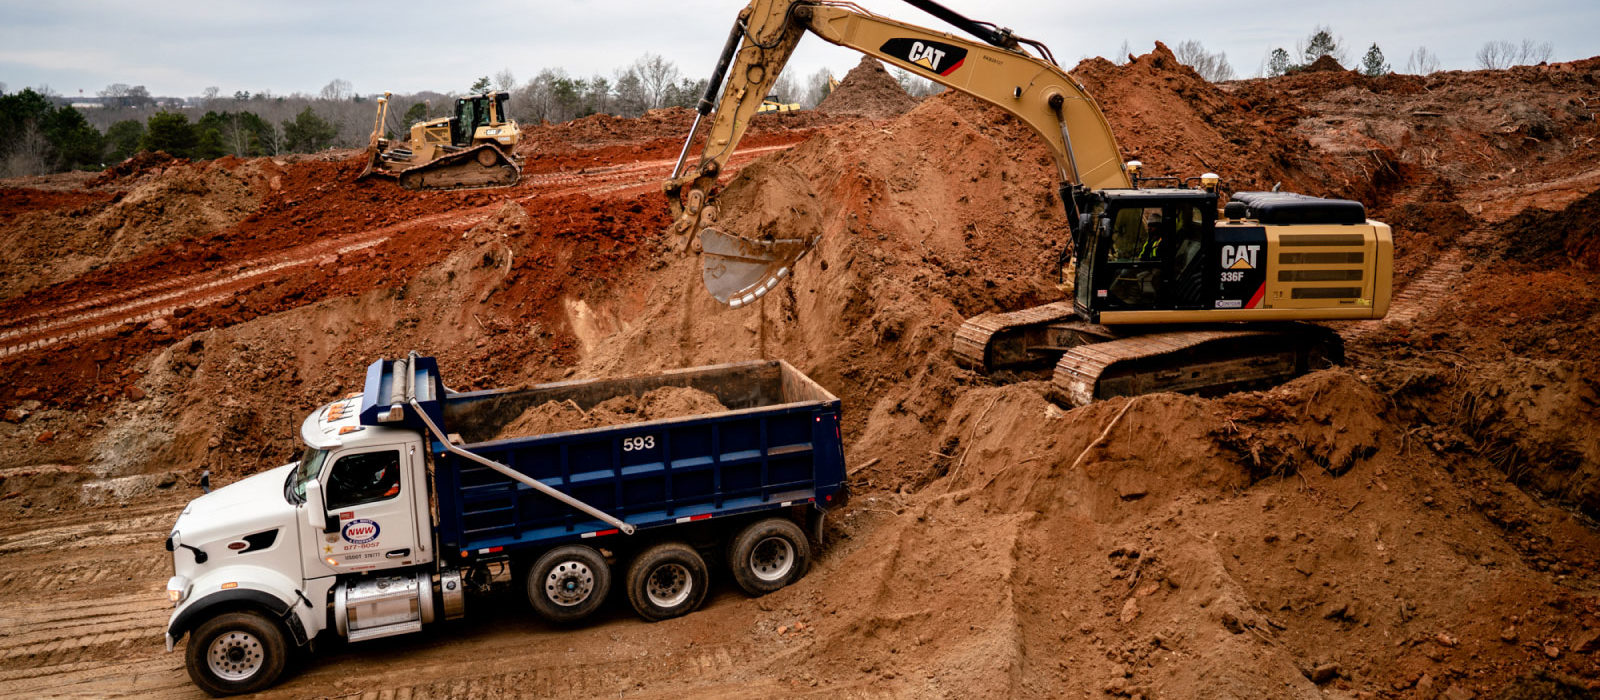 Cat 336f Loading Dirt Onto Dump Truck At Mass Excavation Job Site